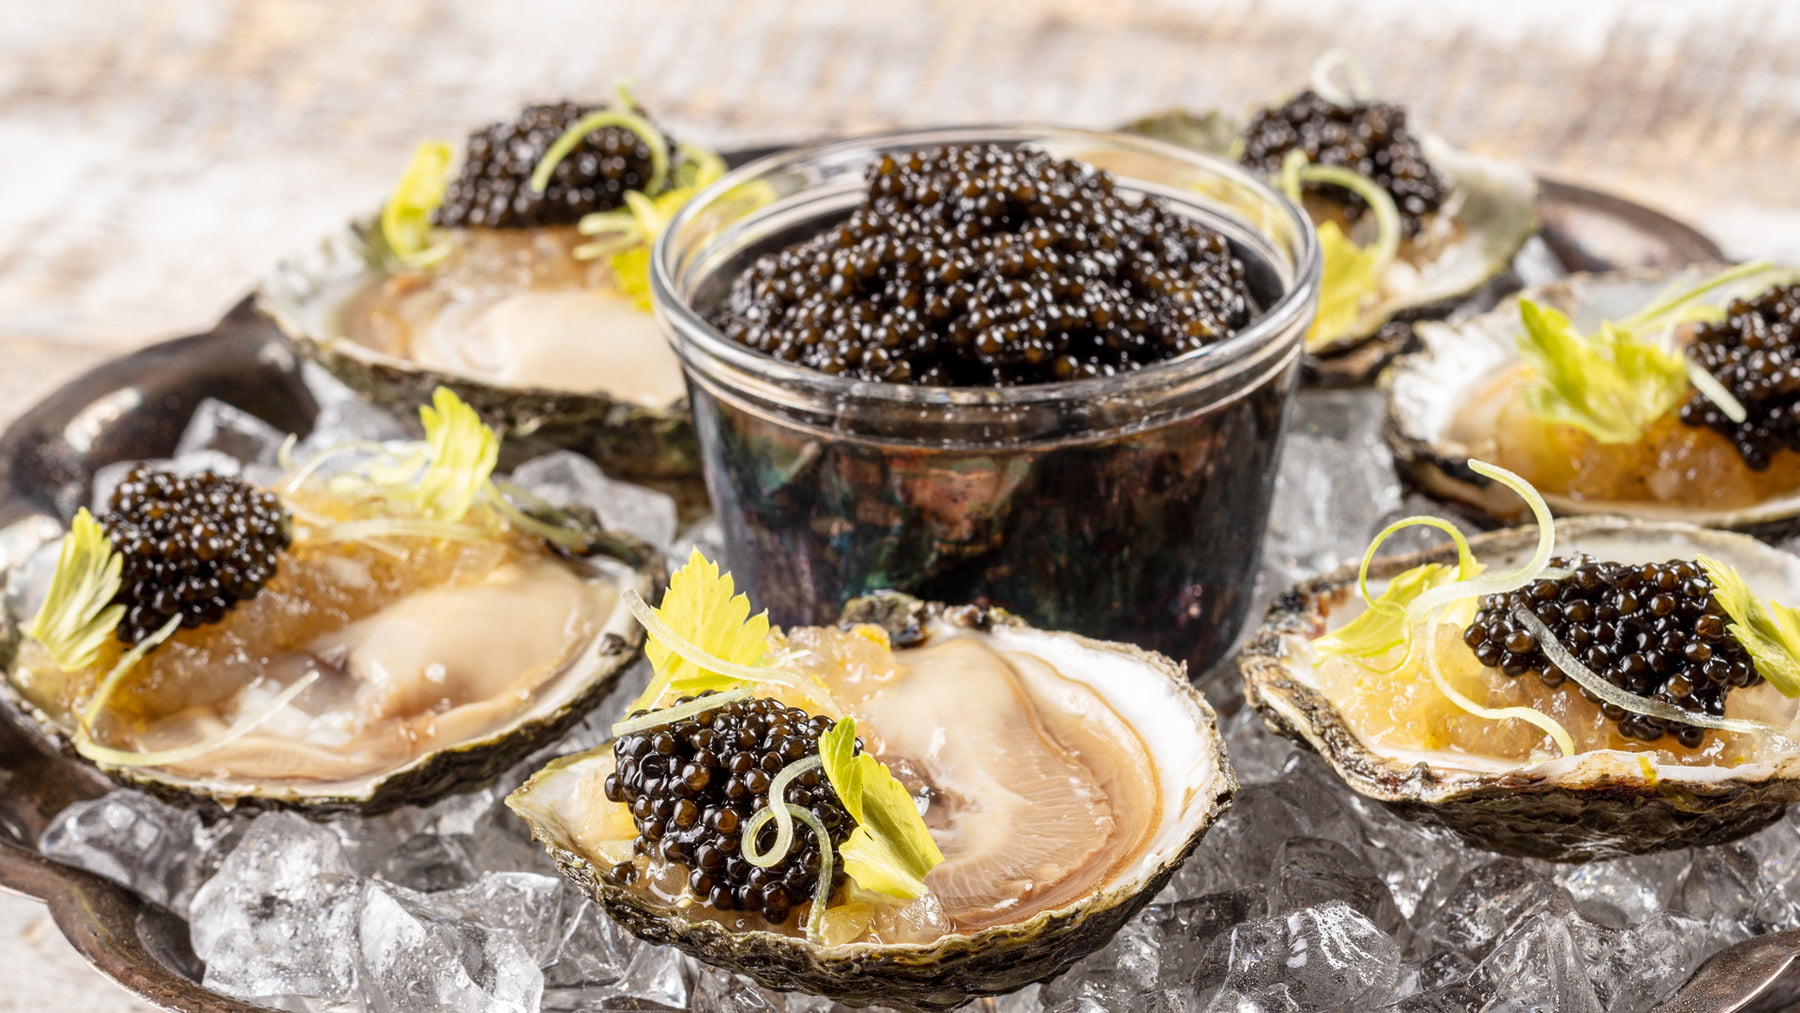 Celebrating “National Caviar Day” Thursday July 18th